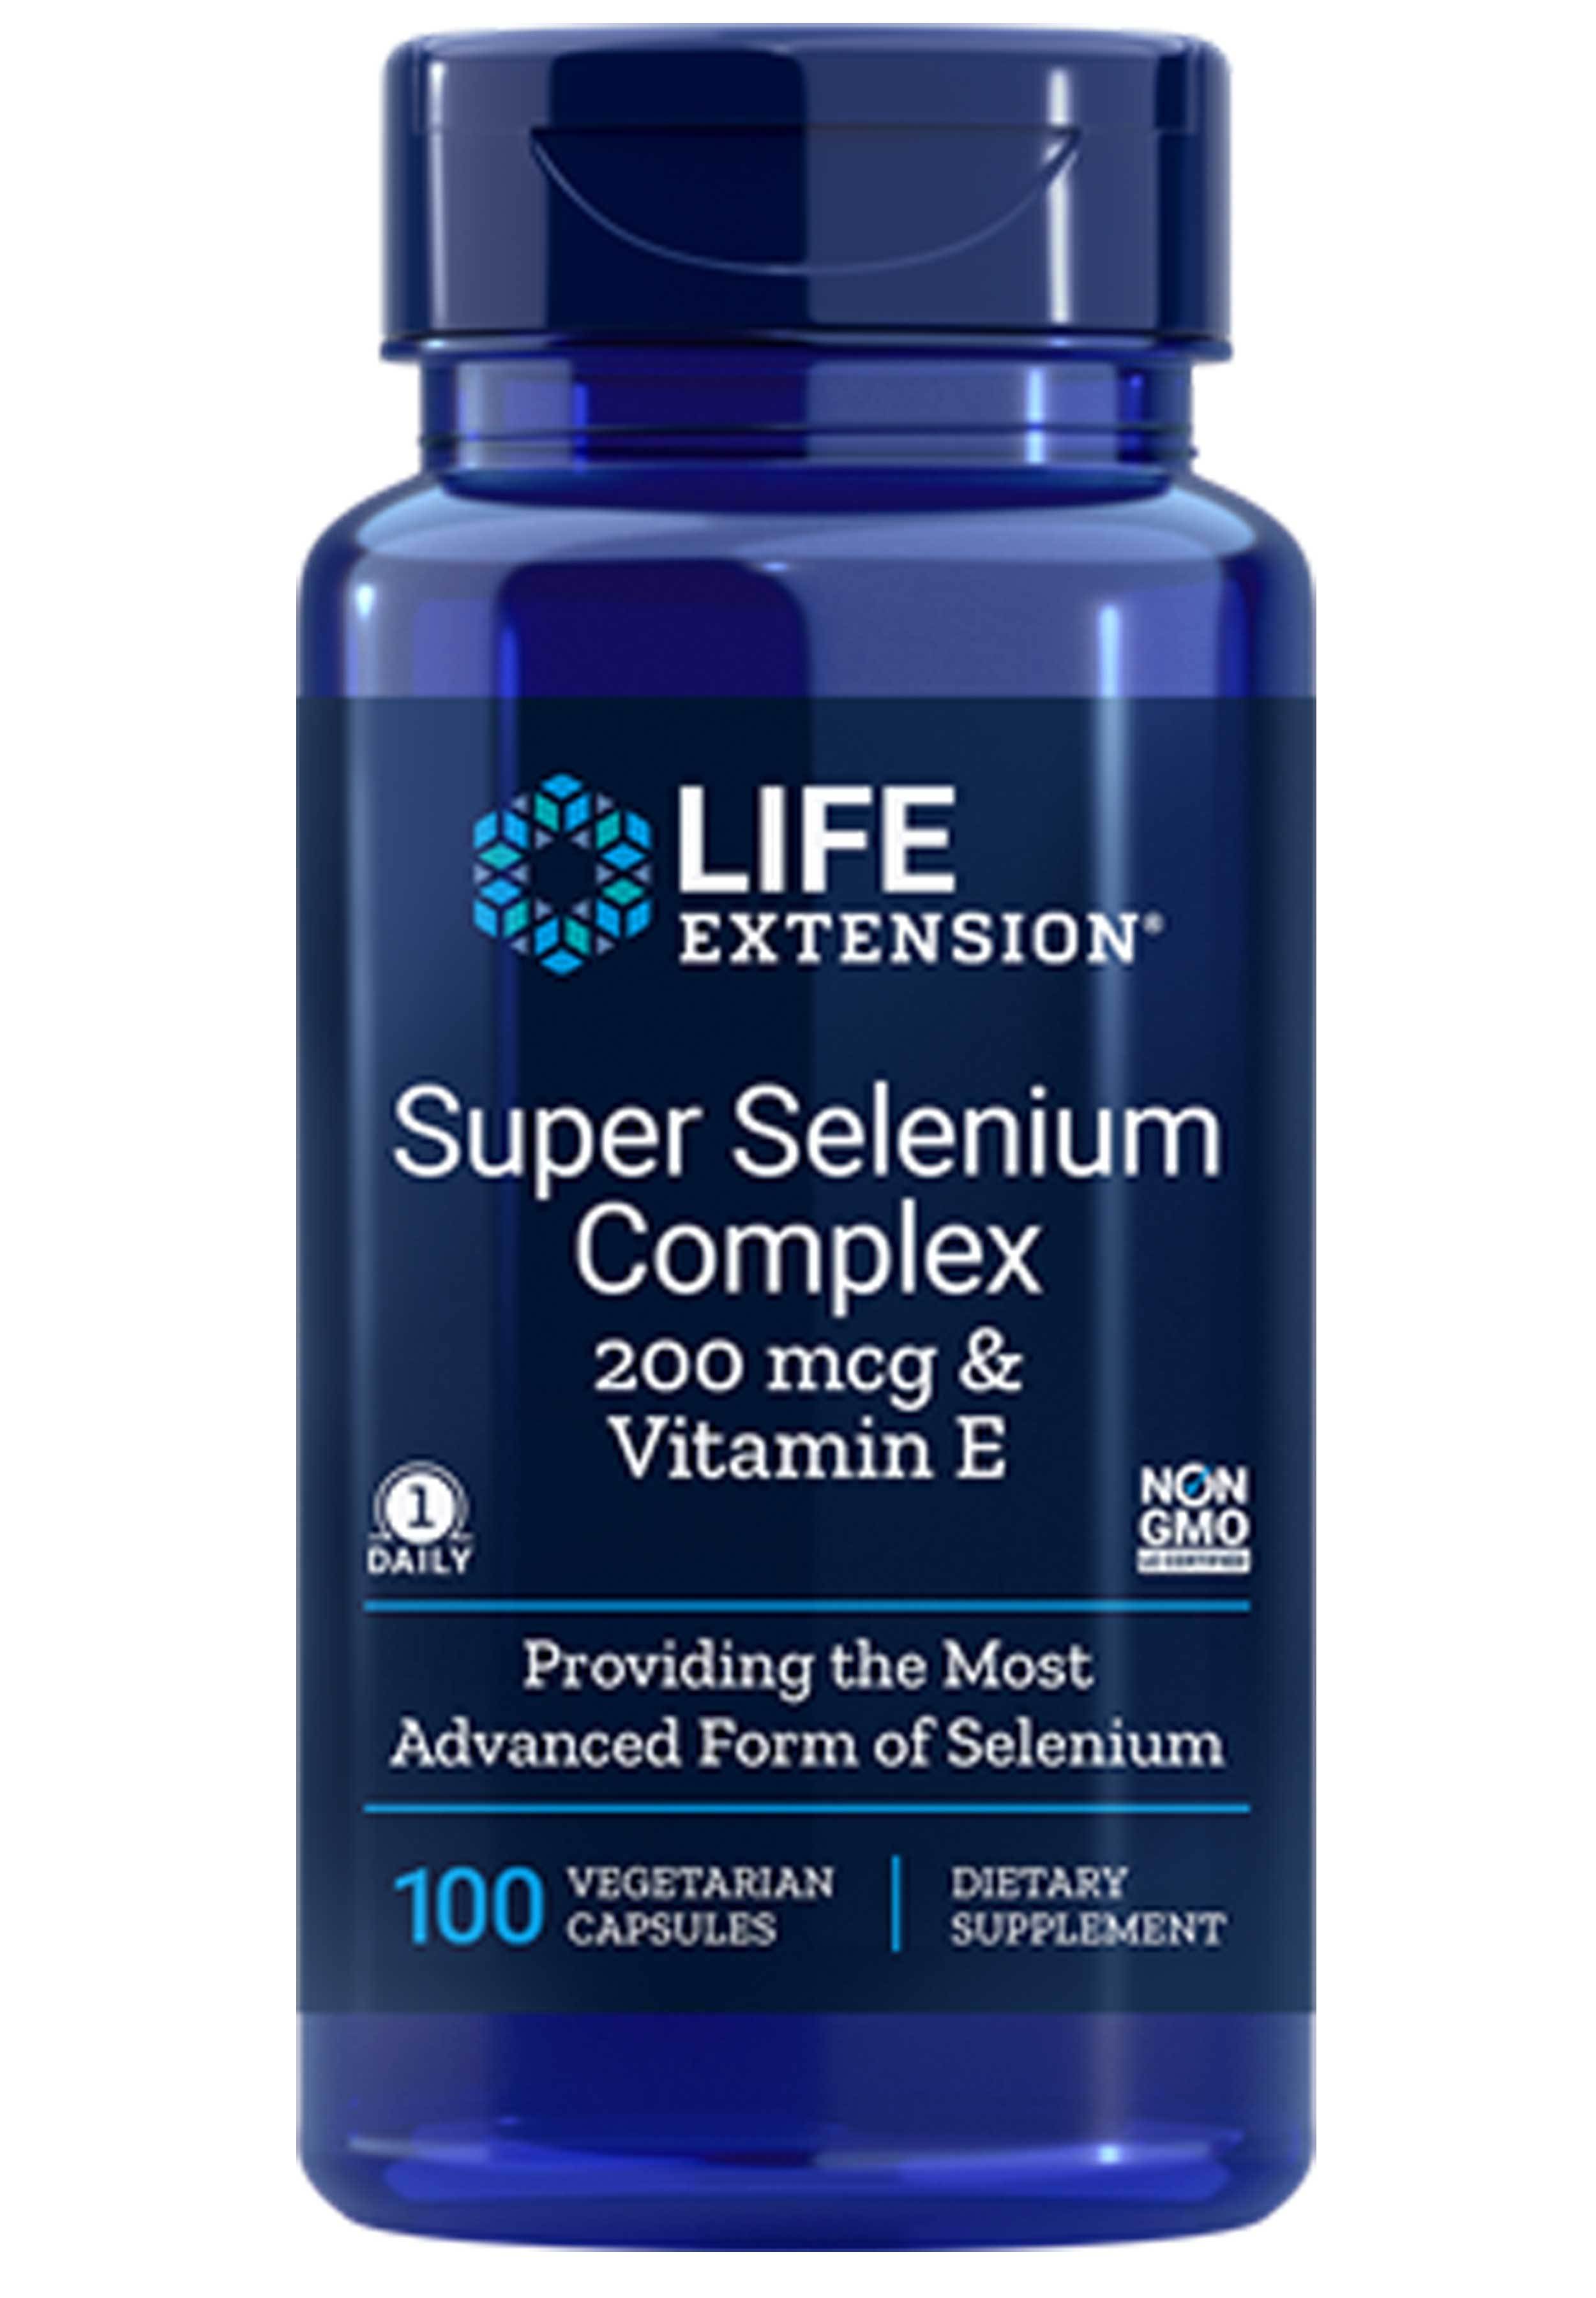 Life Extension Super Selenium Complex